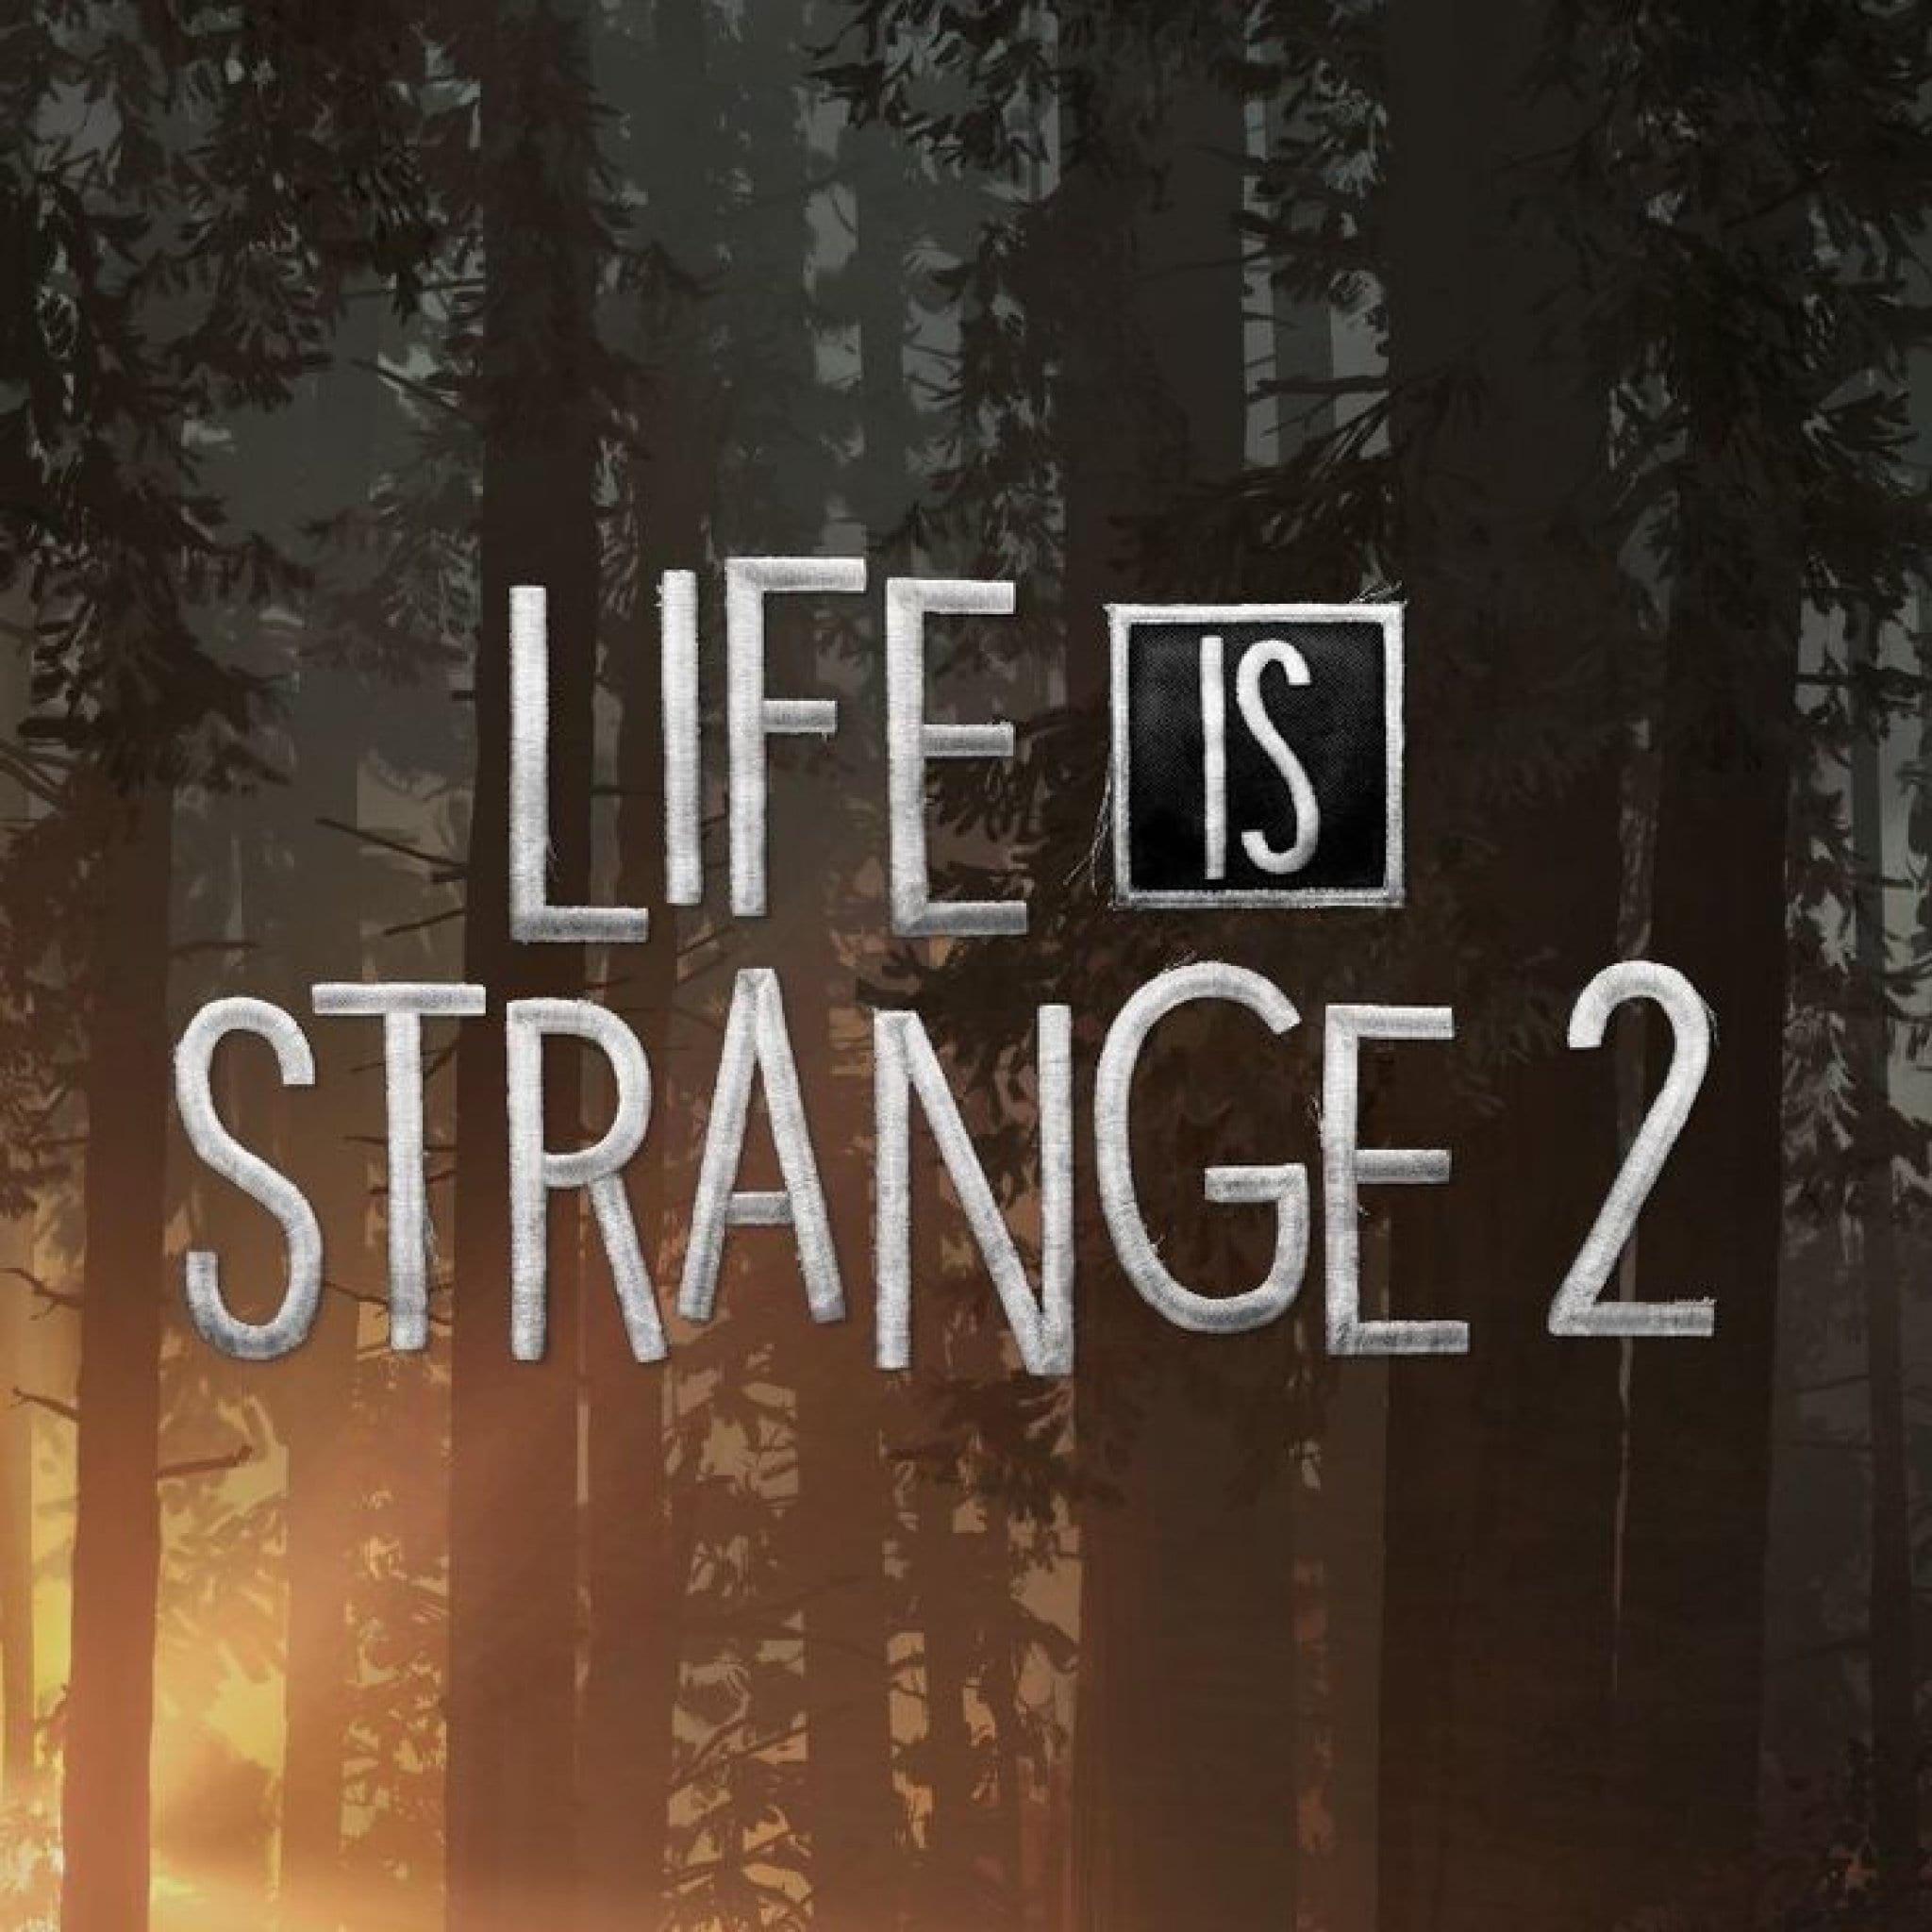 Life is жизнь. Life is Strange. Life is Strange 2 логотип. Лайв из Стрендж надпись. Life is Strange 2 значки.